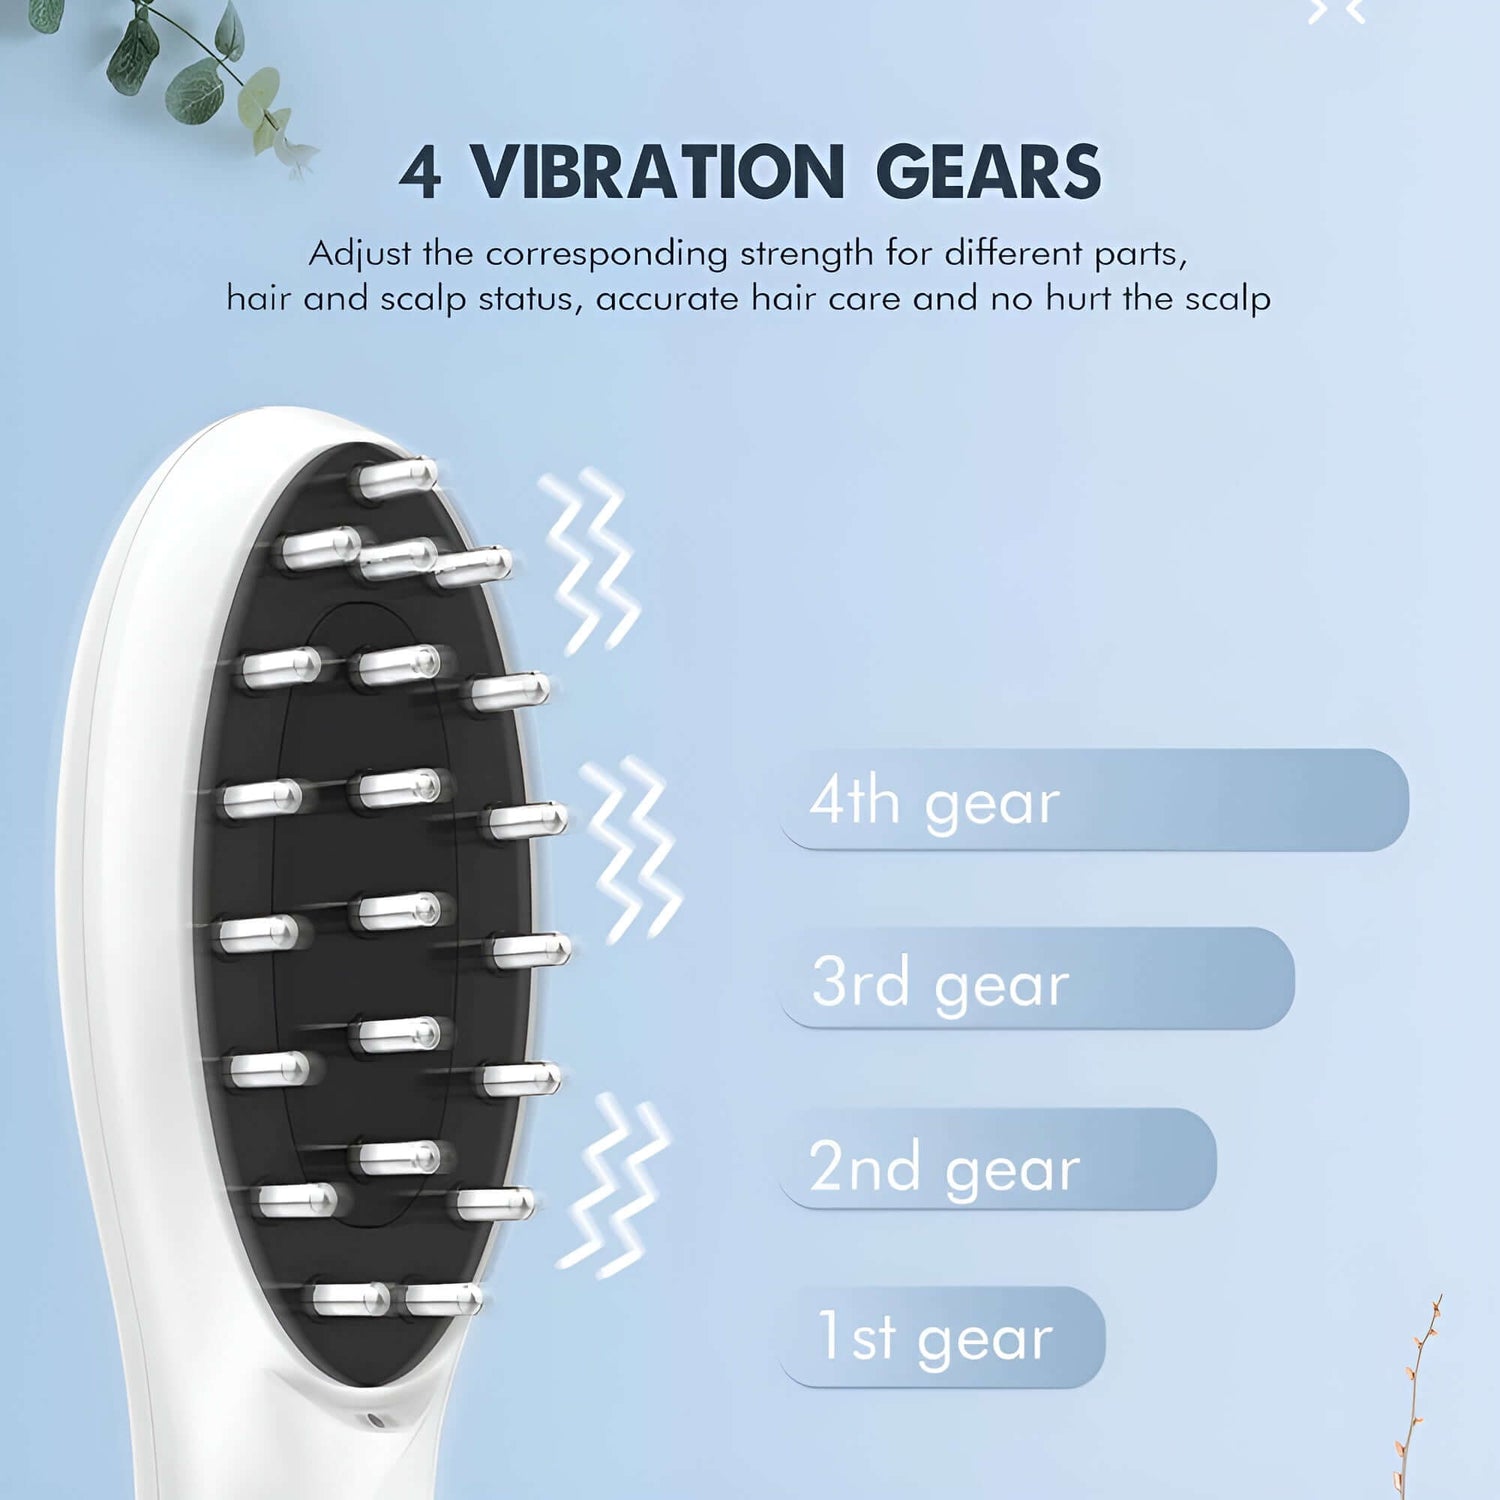 Revolutionary massage comb - 4 vibration gears for best hair grow